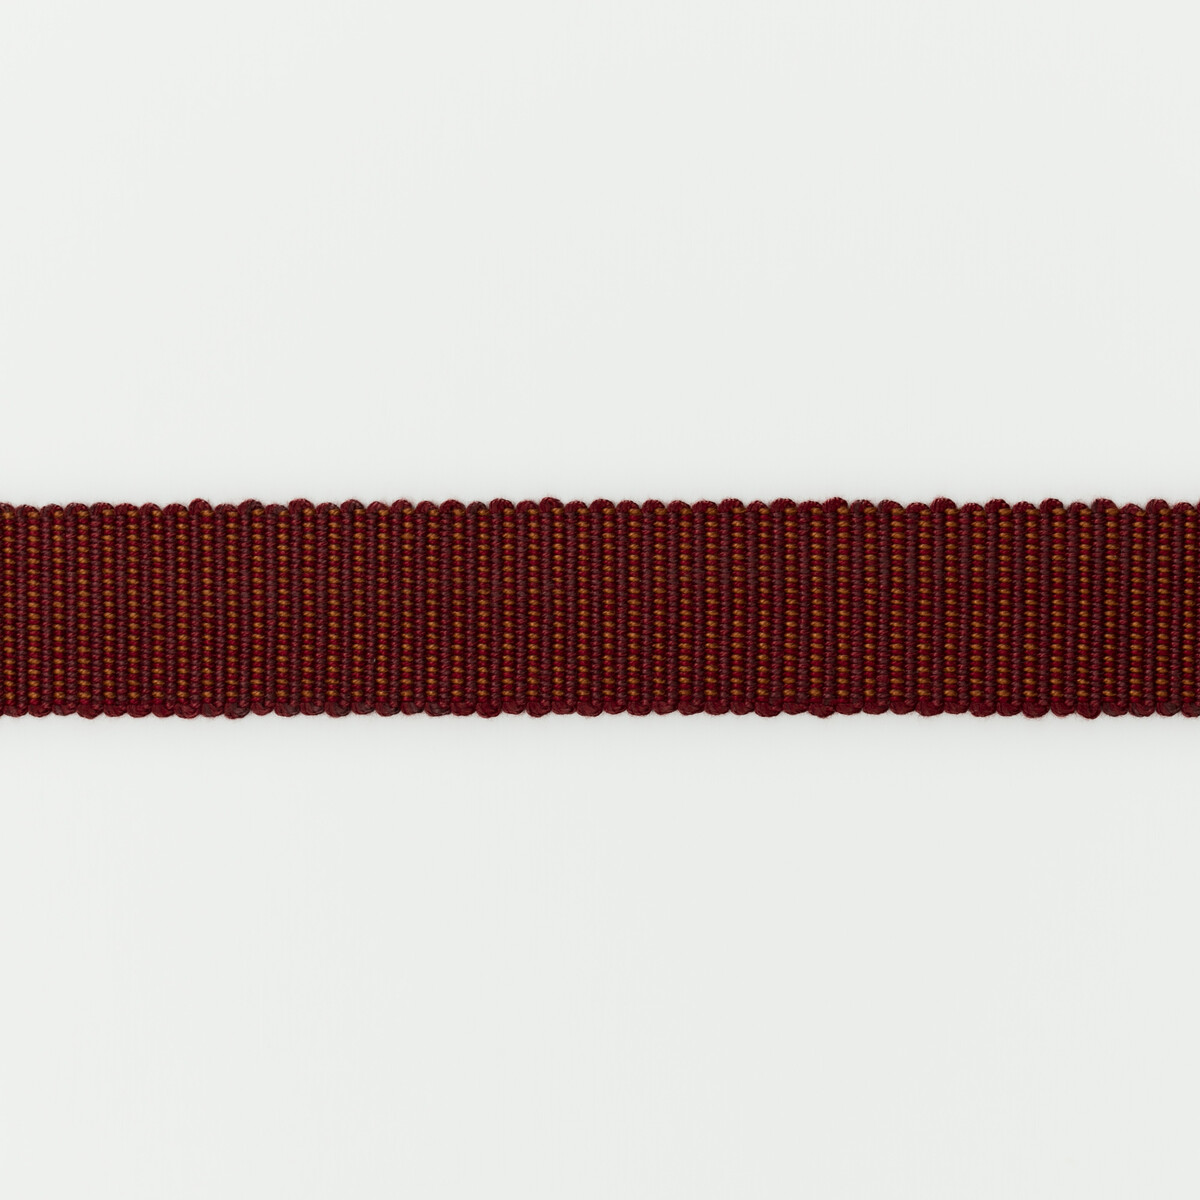 G P & J Baker T6026.480.0 Perandor Plain Braid Trim Fabric in Red